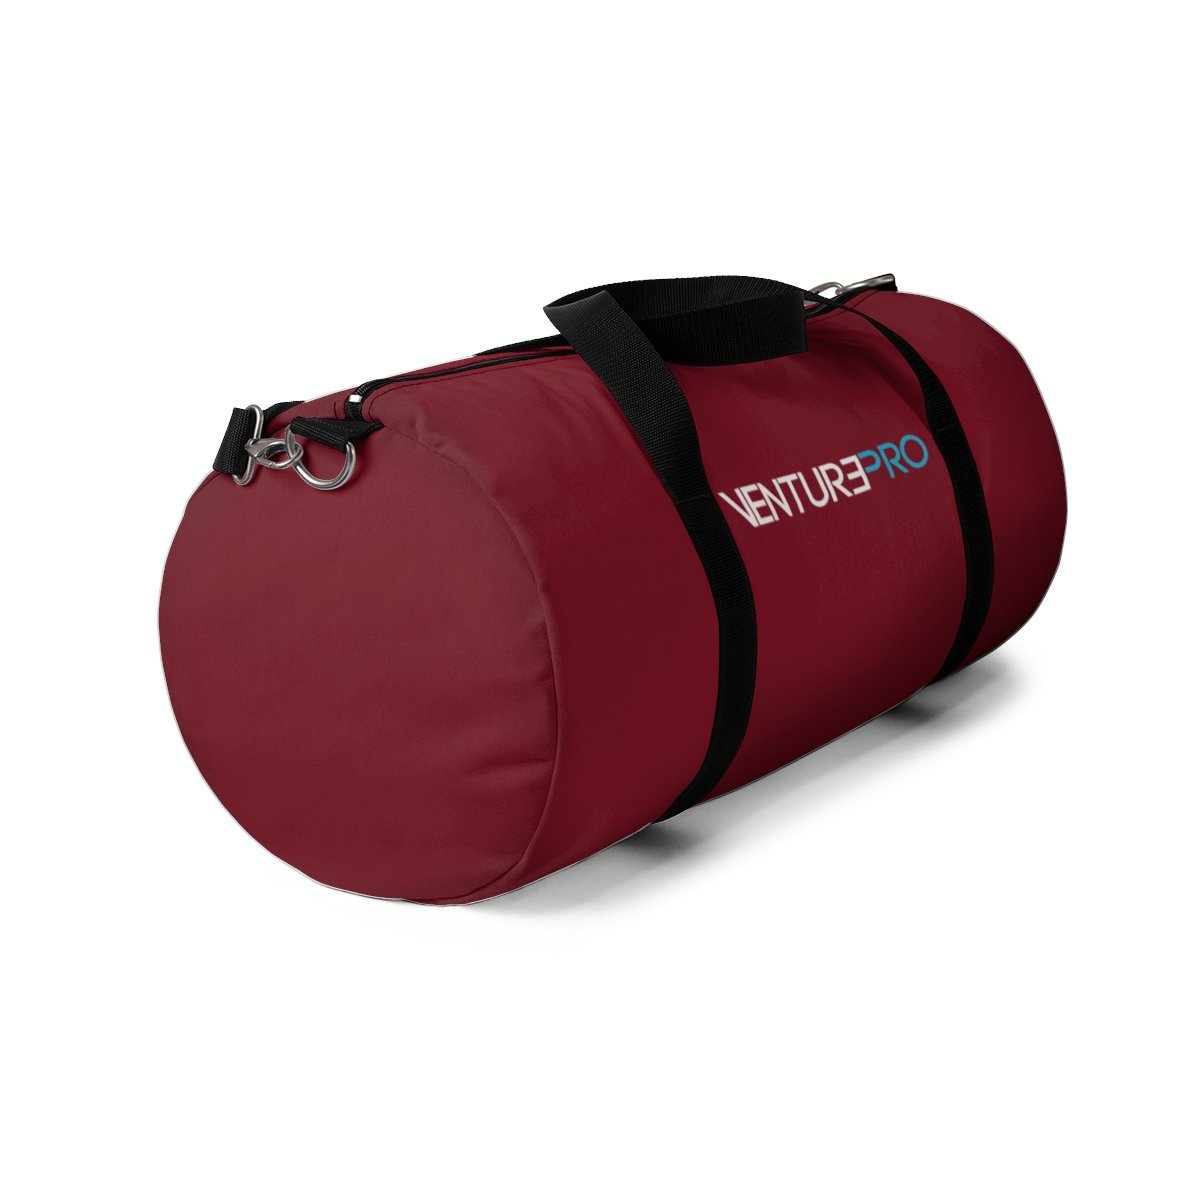 Venture Pro Duffle Bag